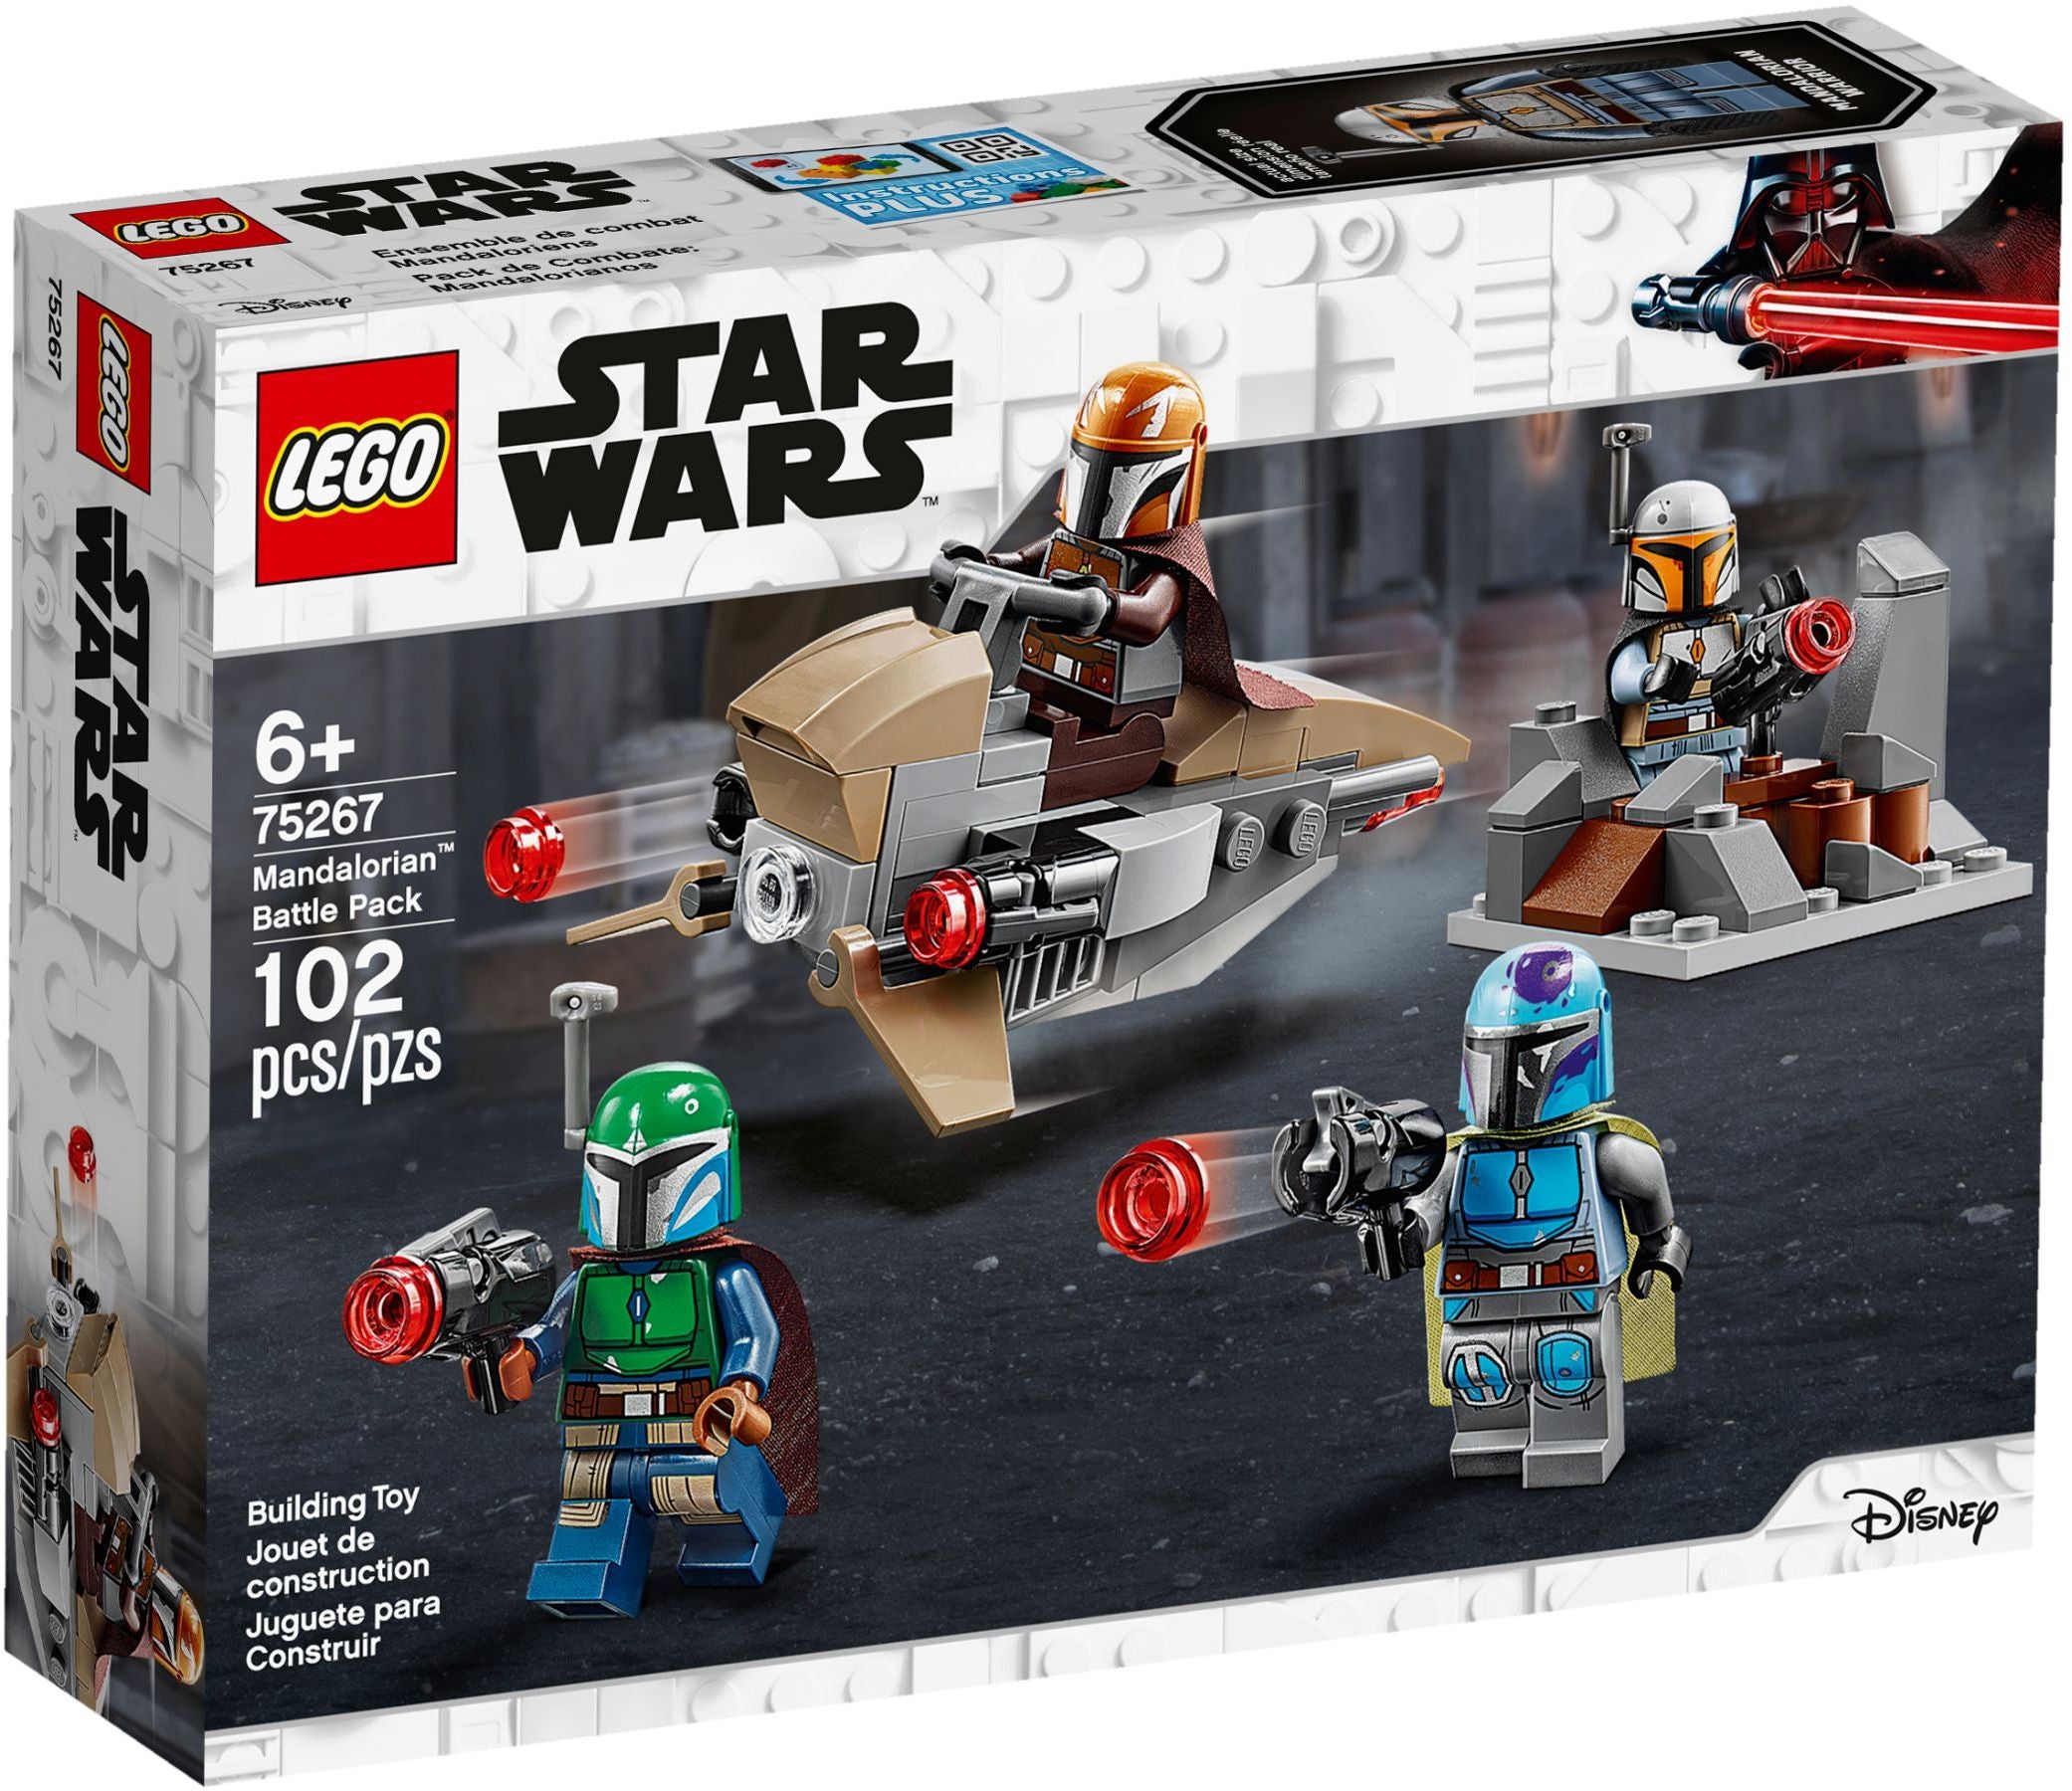 Lego Star Wars 75267 - Mandalorian Battle Pack